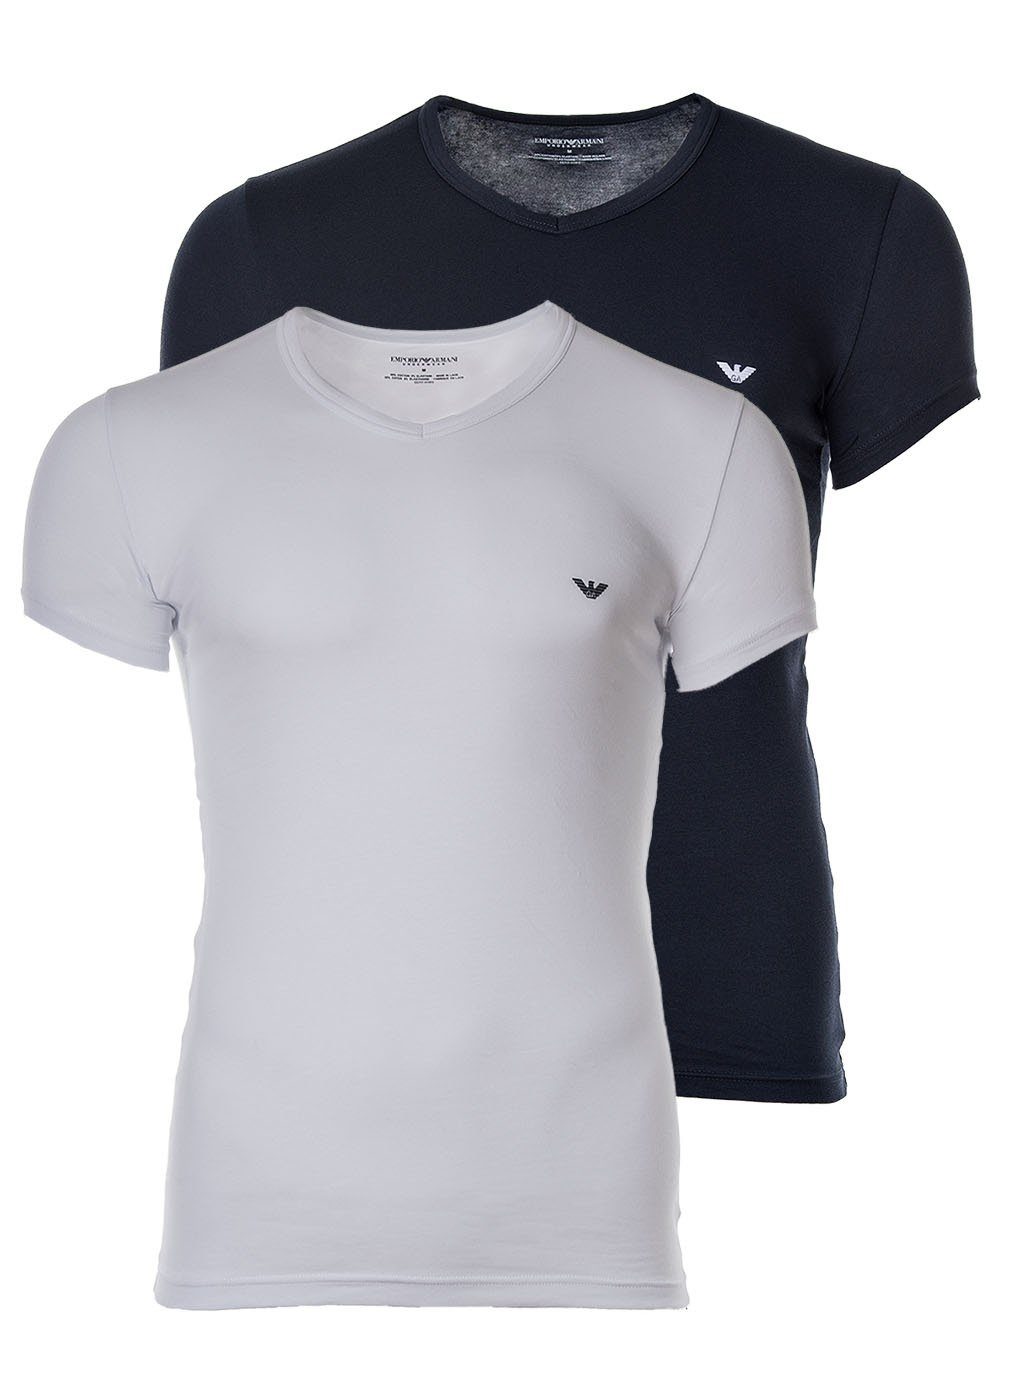 Emporio Armani T-Shirt Herren T-Shirt 2er Pack - V-Neck, V-Ausschnitt weiß/marine